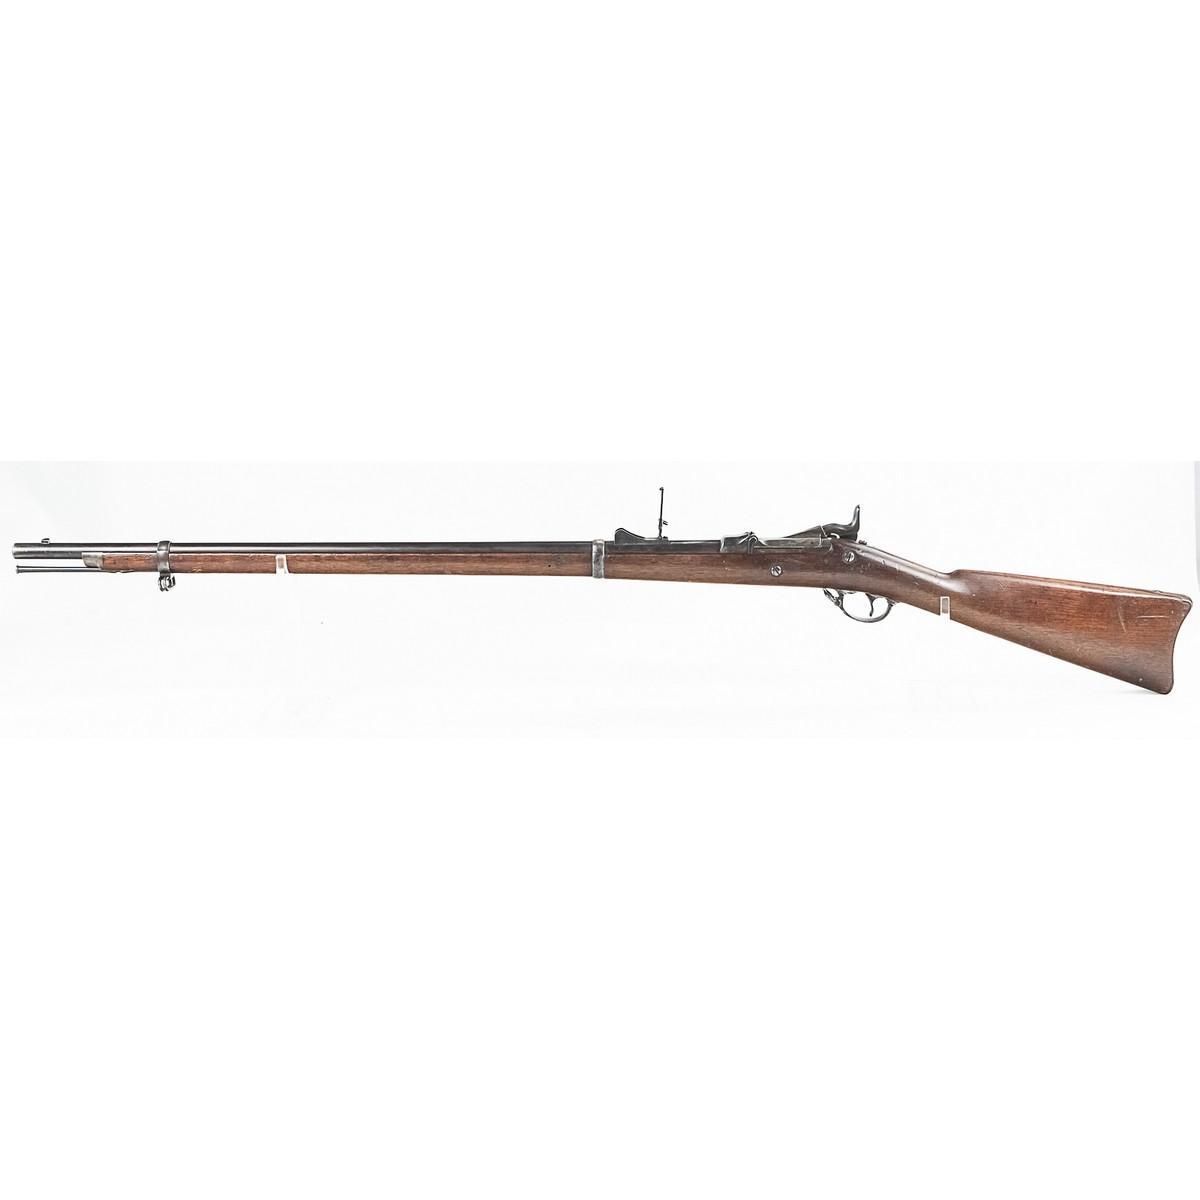 US Springfield Model 1873 Rifle .45-70 (A)